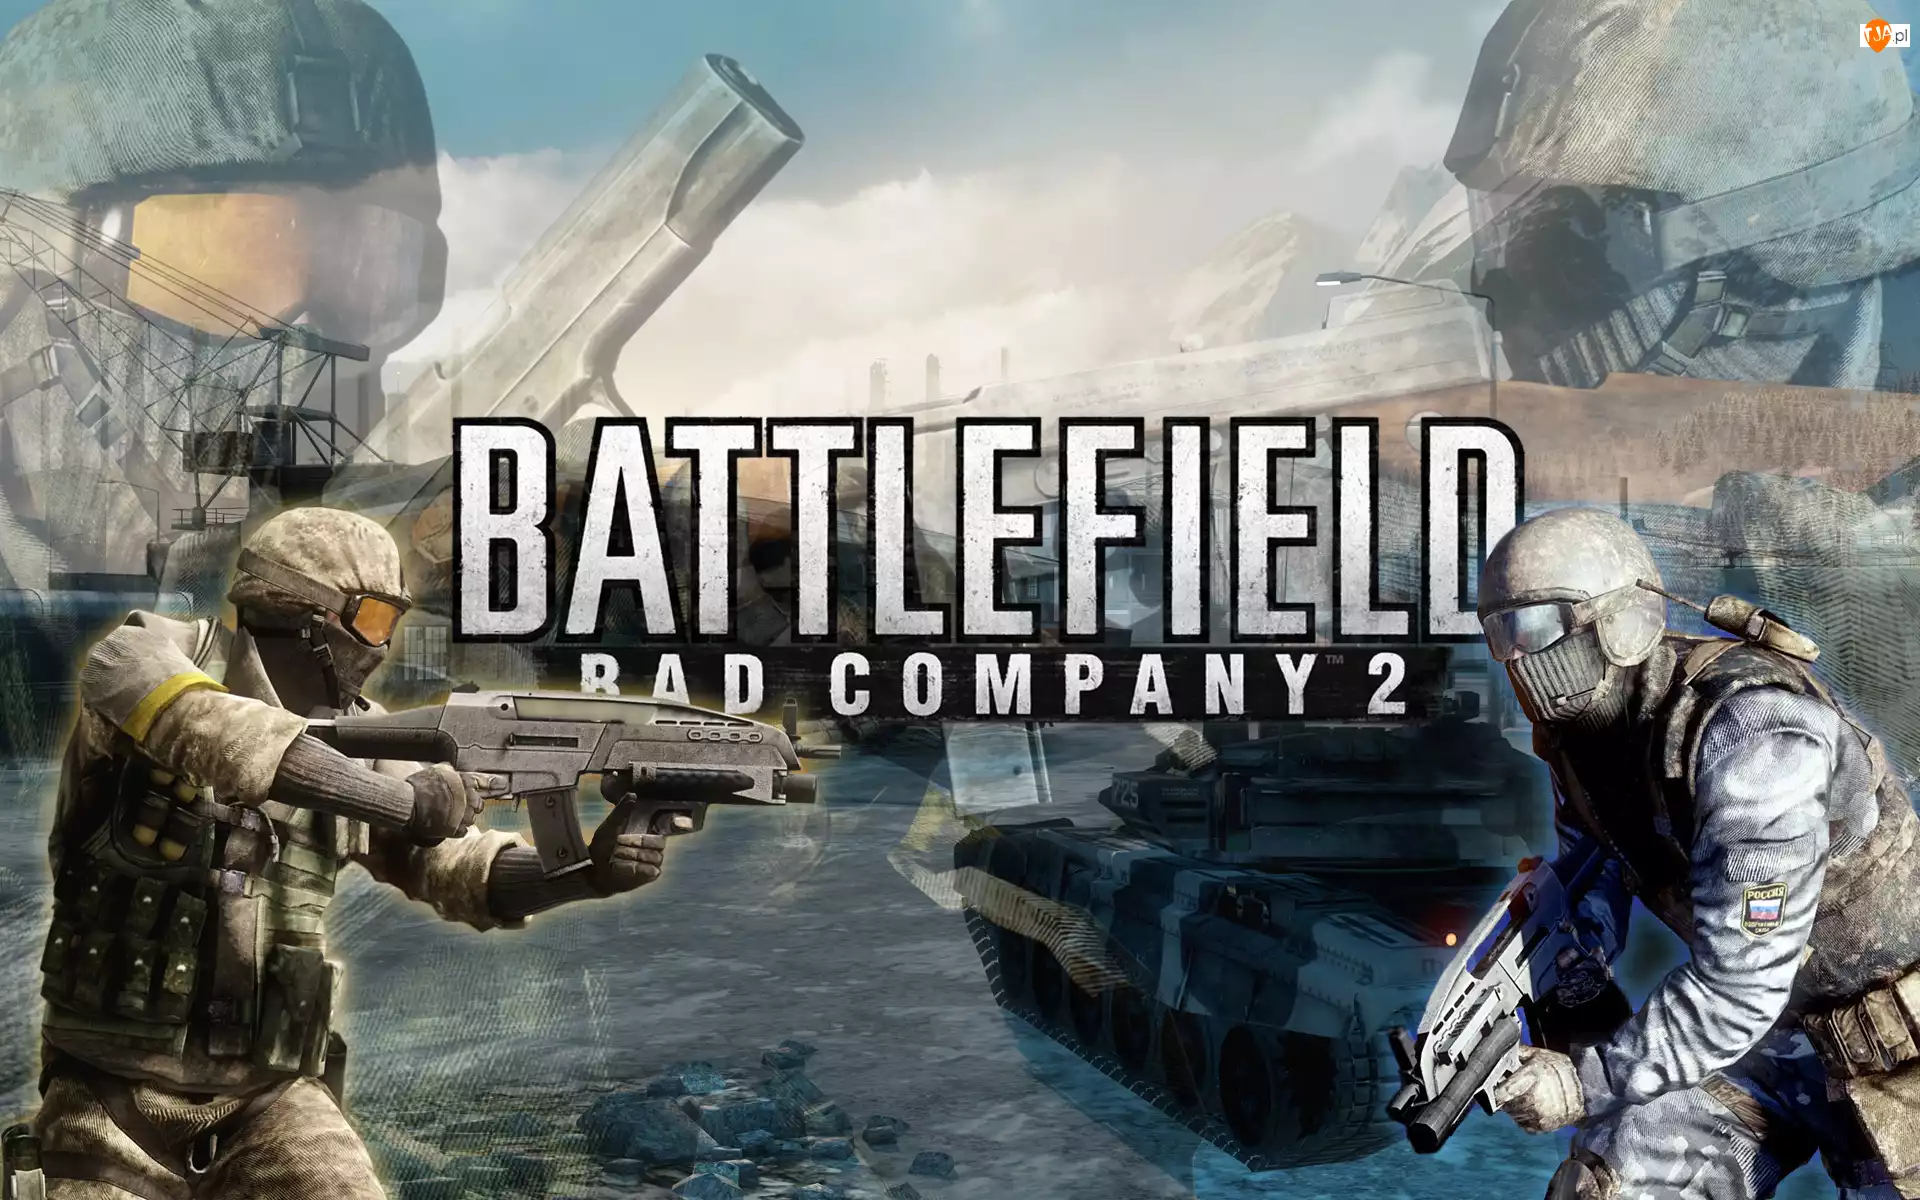 Battlefield Bad Company 2, Gra, PS3